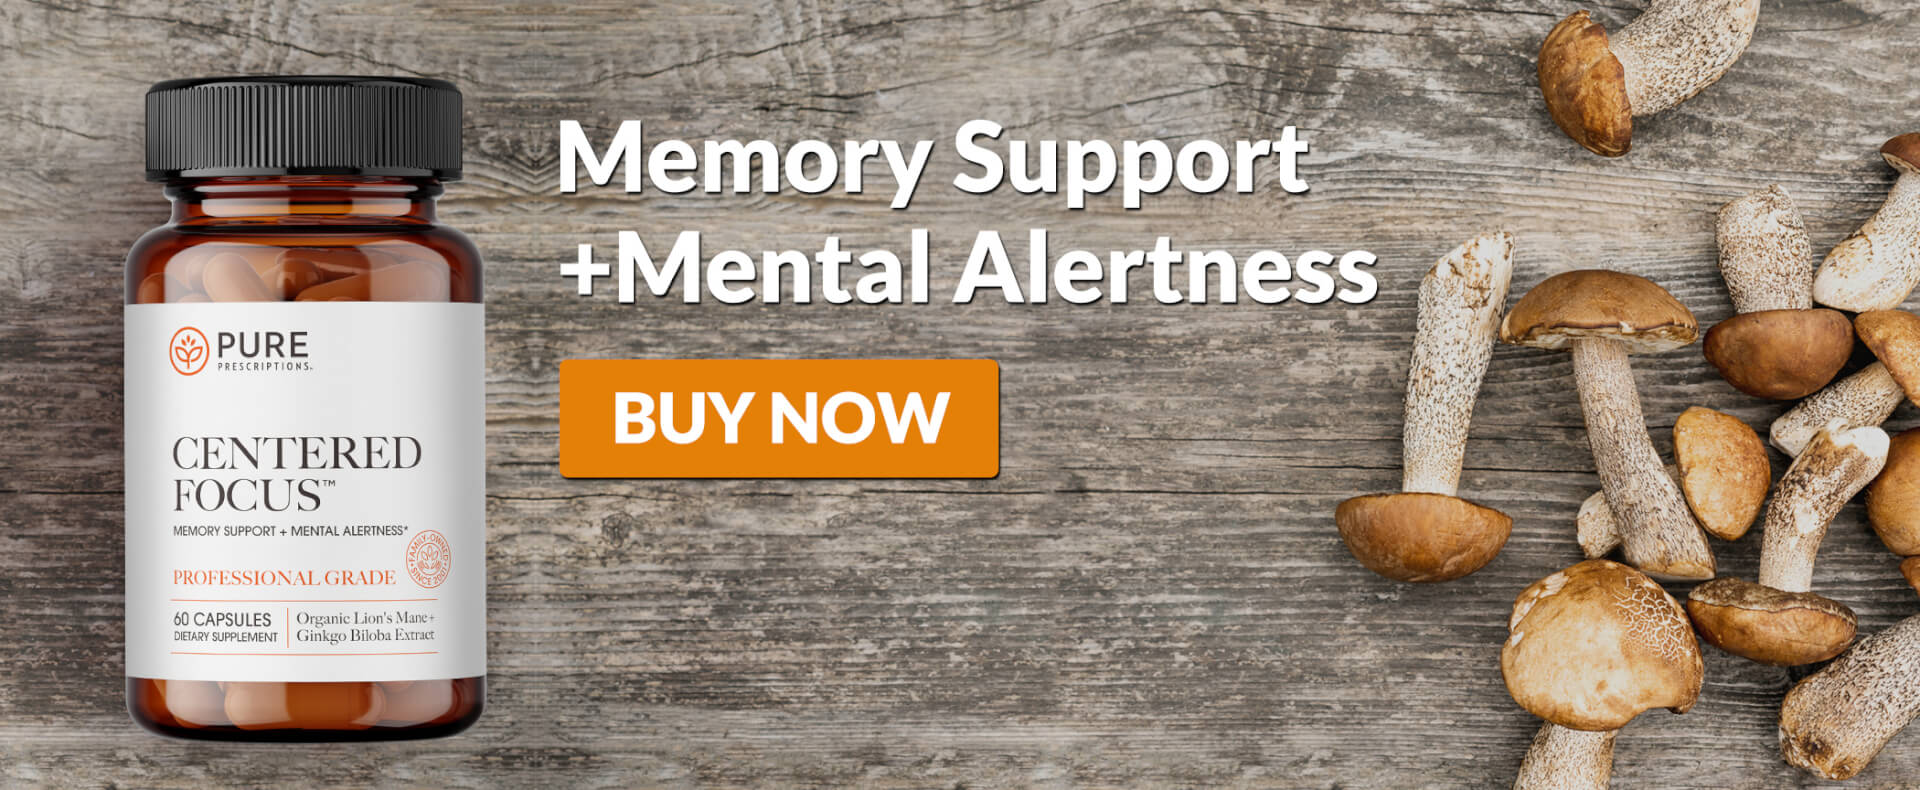 Memory Support + Mental Alertness